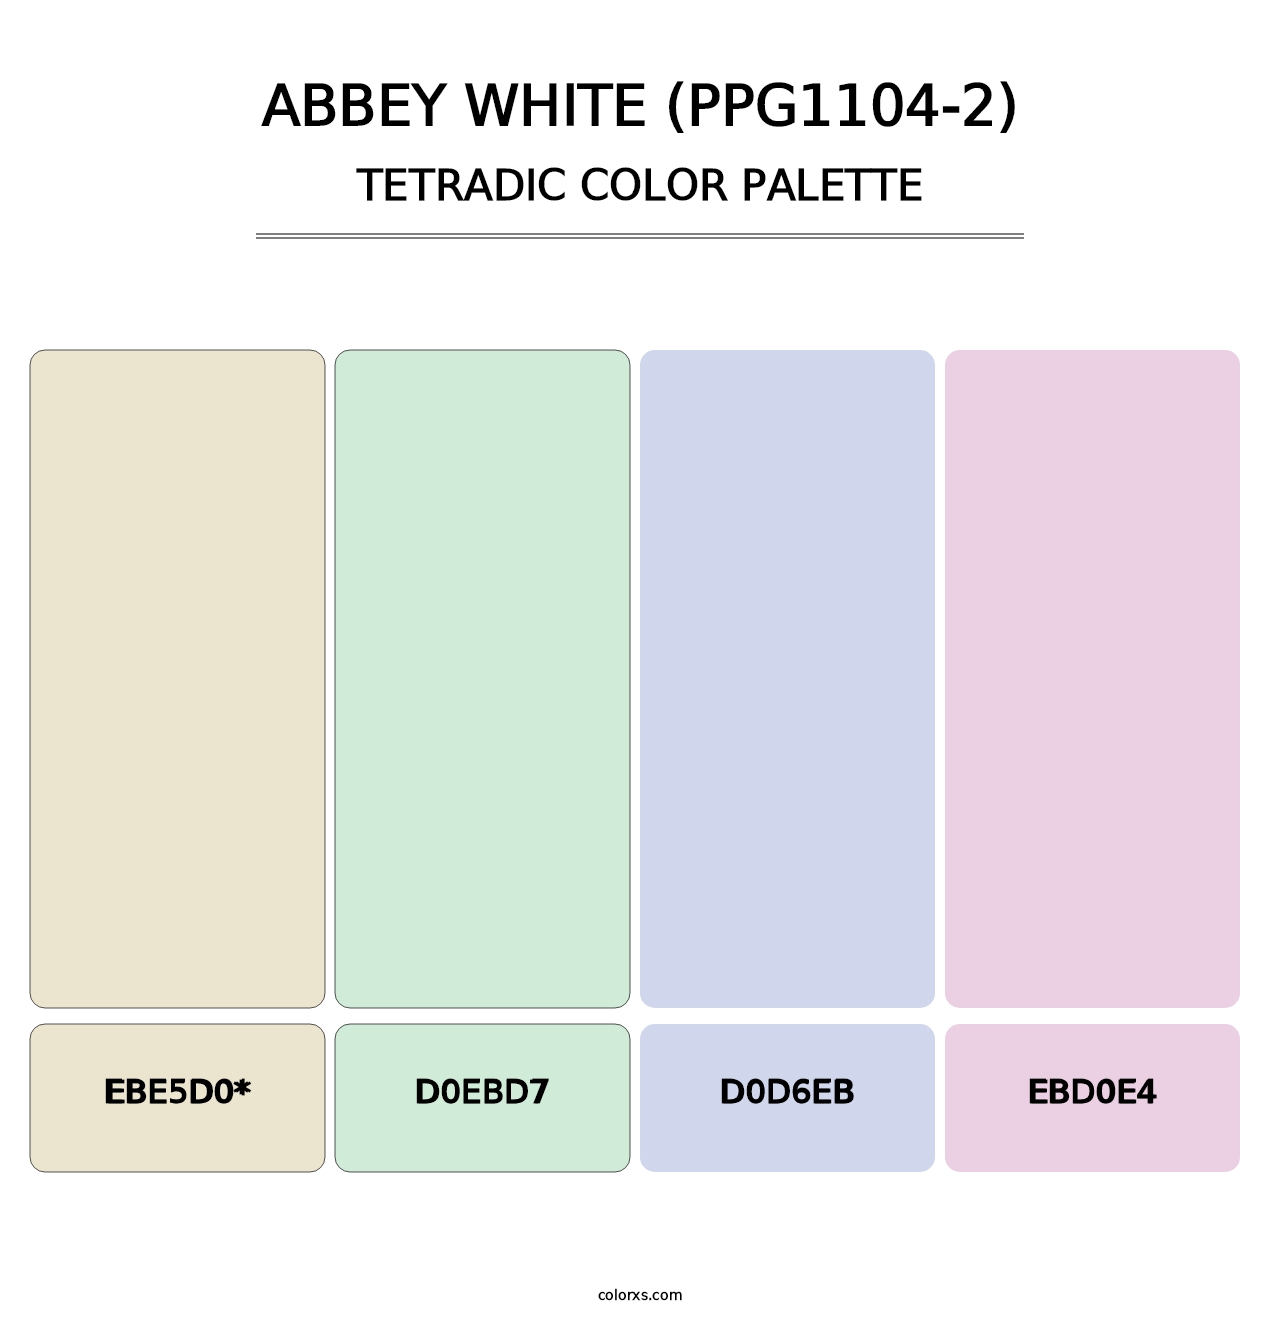 Abbey White (PPG1104-2) - Tetradic Color Palette